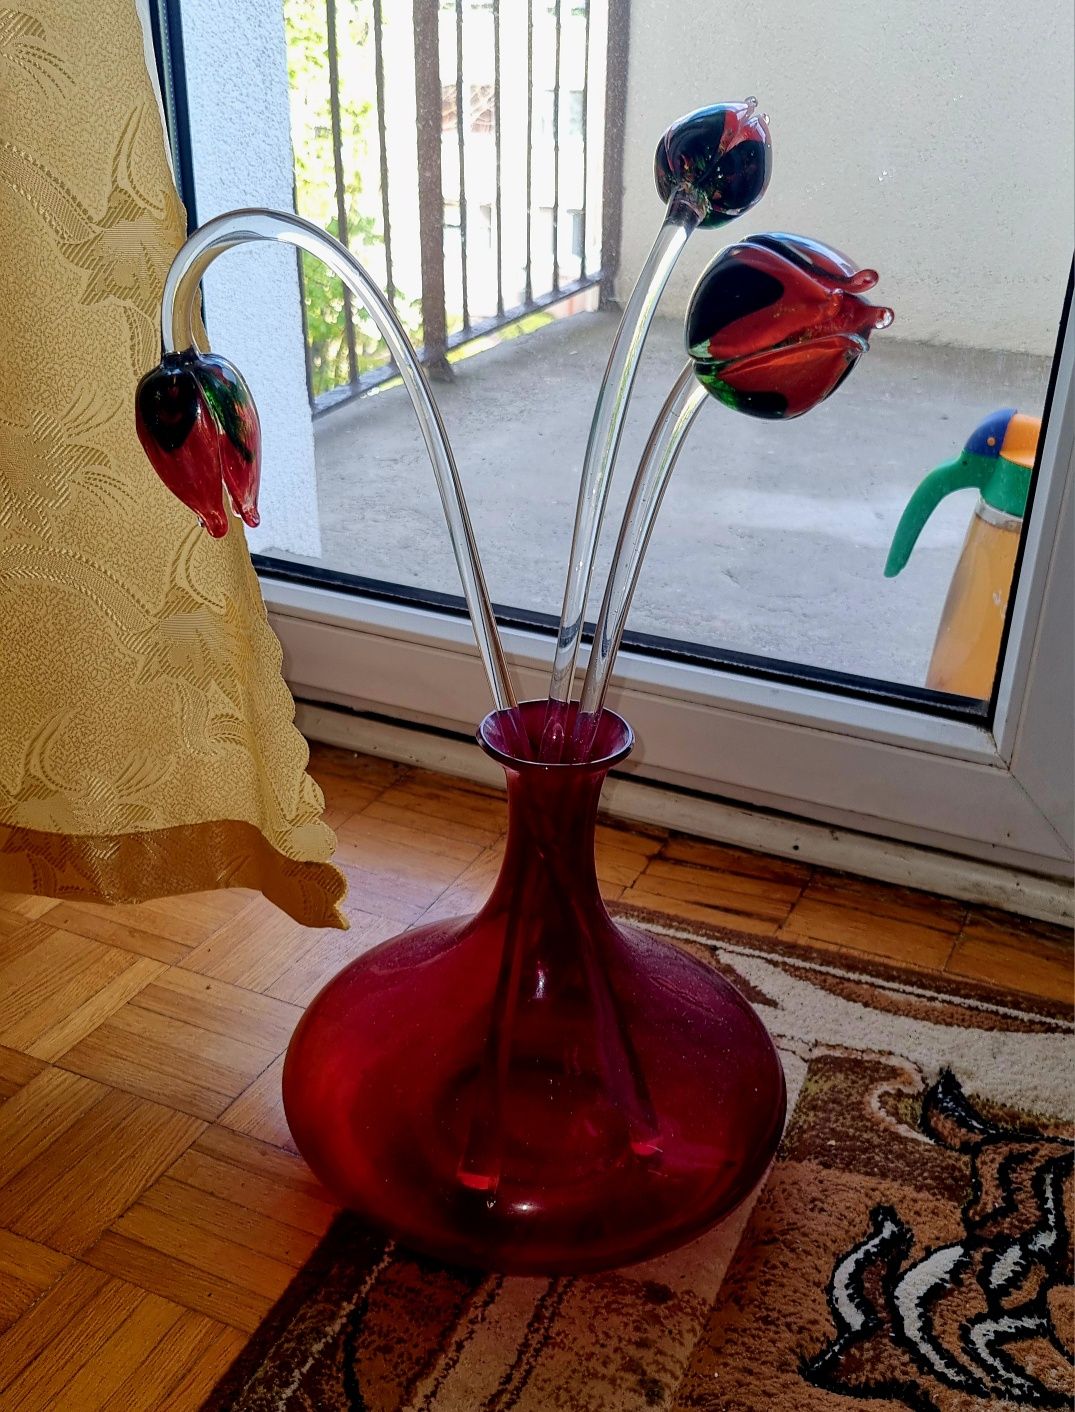 Szklany wazon ze szklanymi tulipanami ,unikat